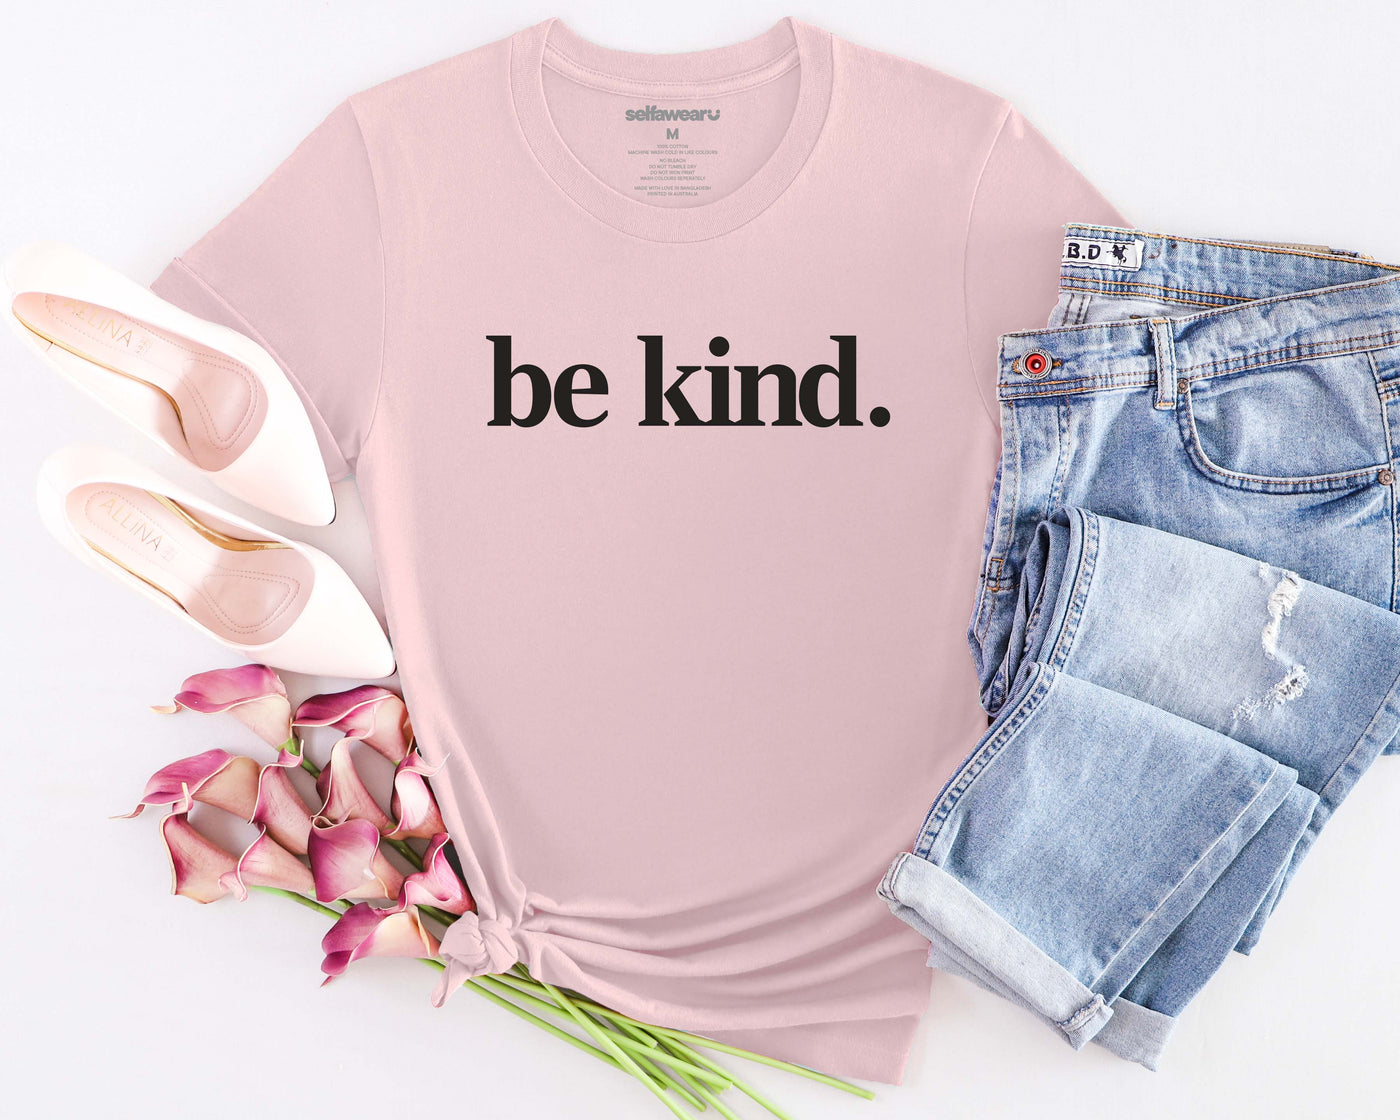 Be Kind. T-Shirt Pink Shirts Selfawear 